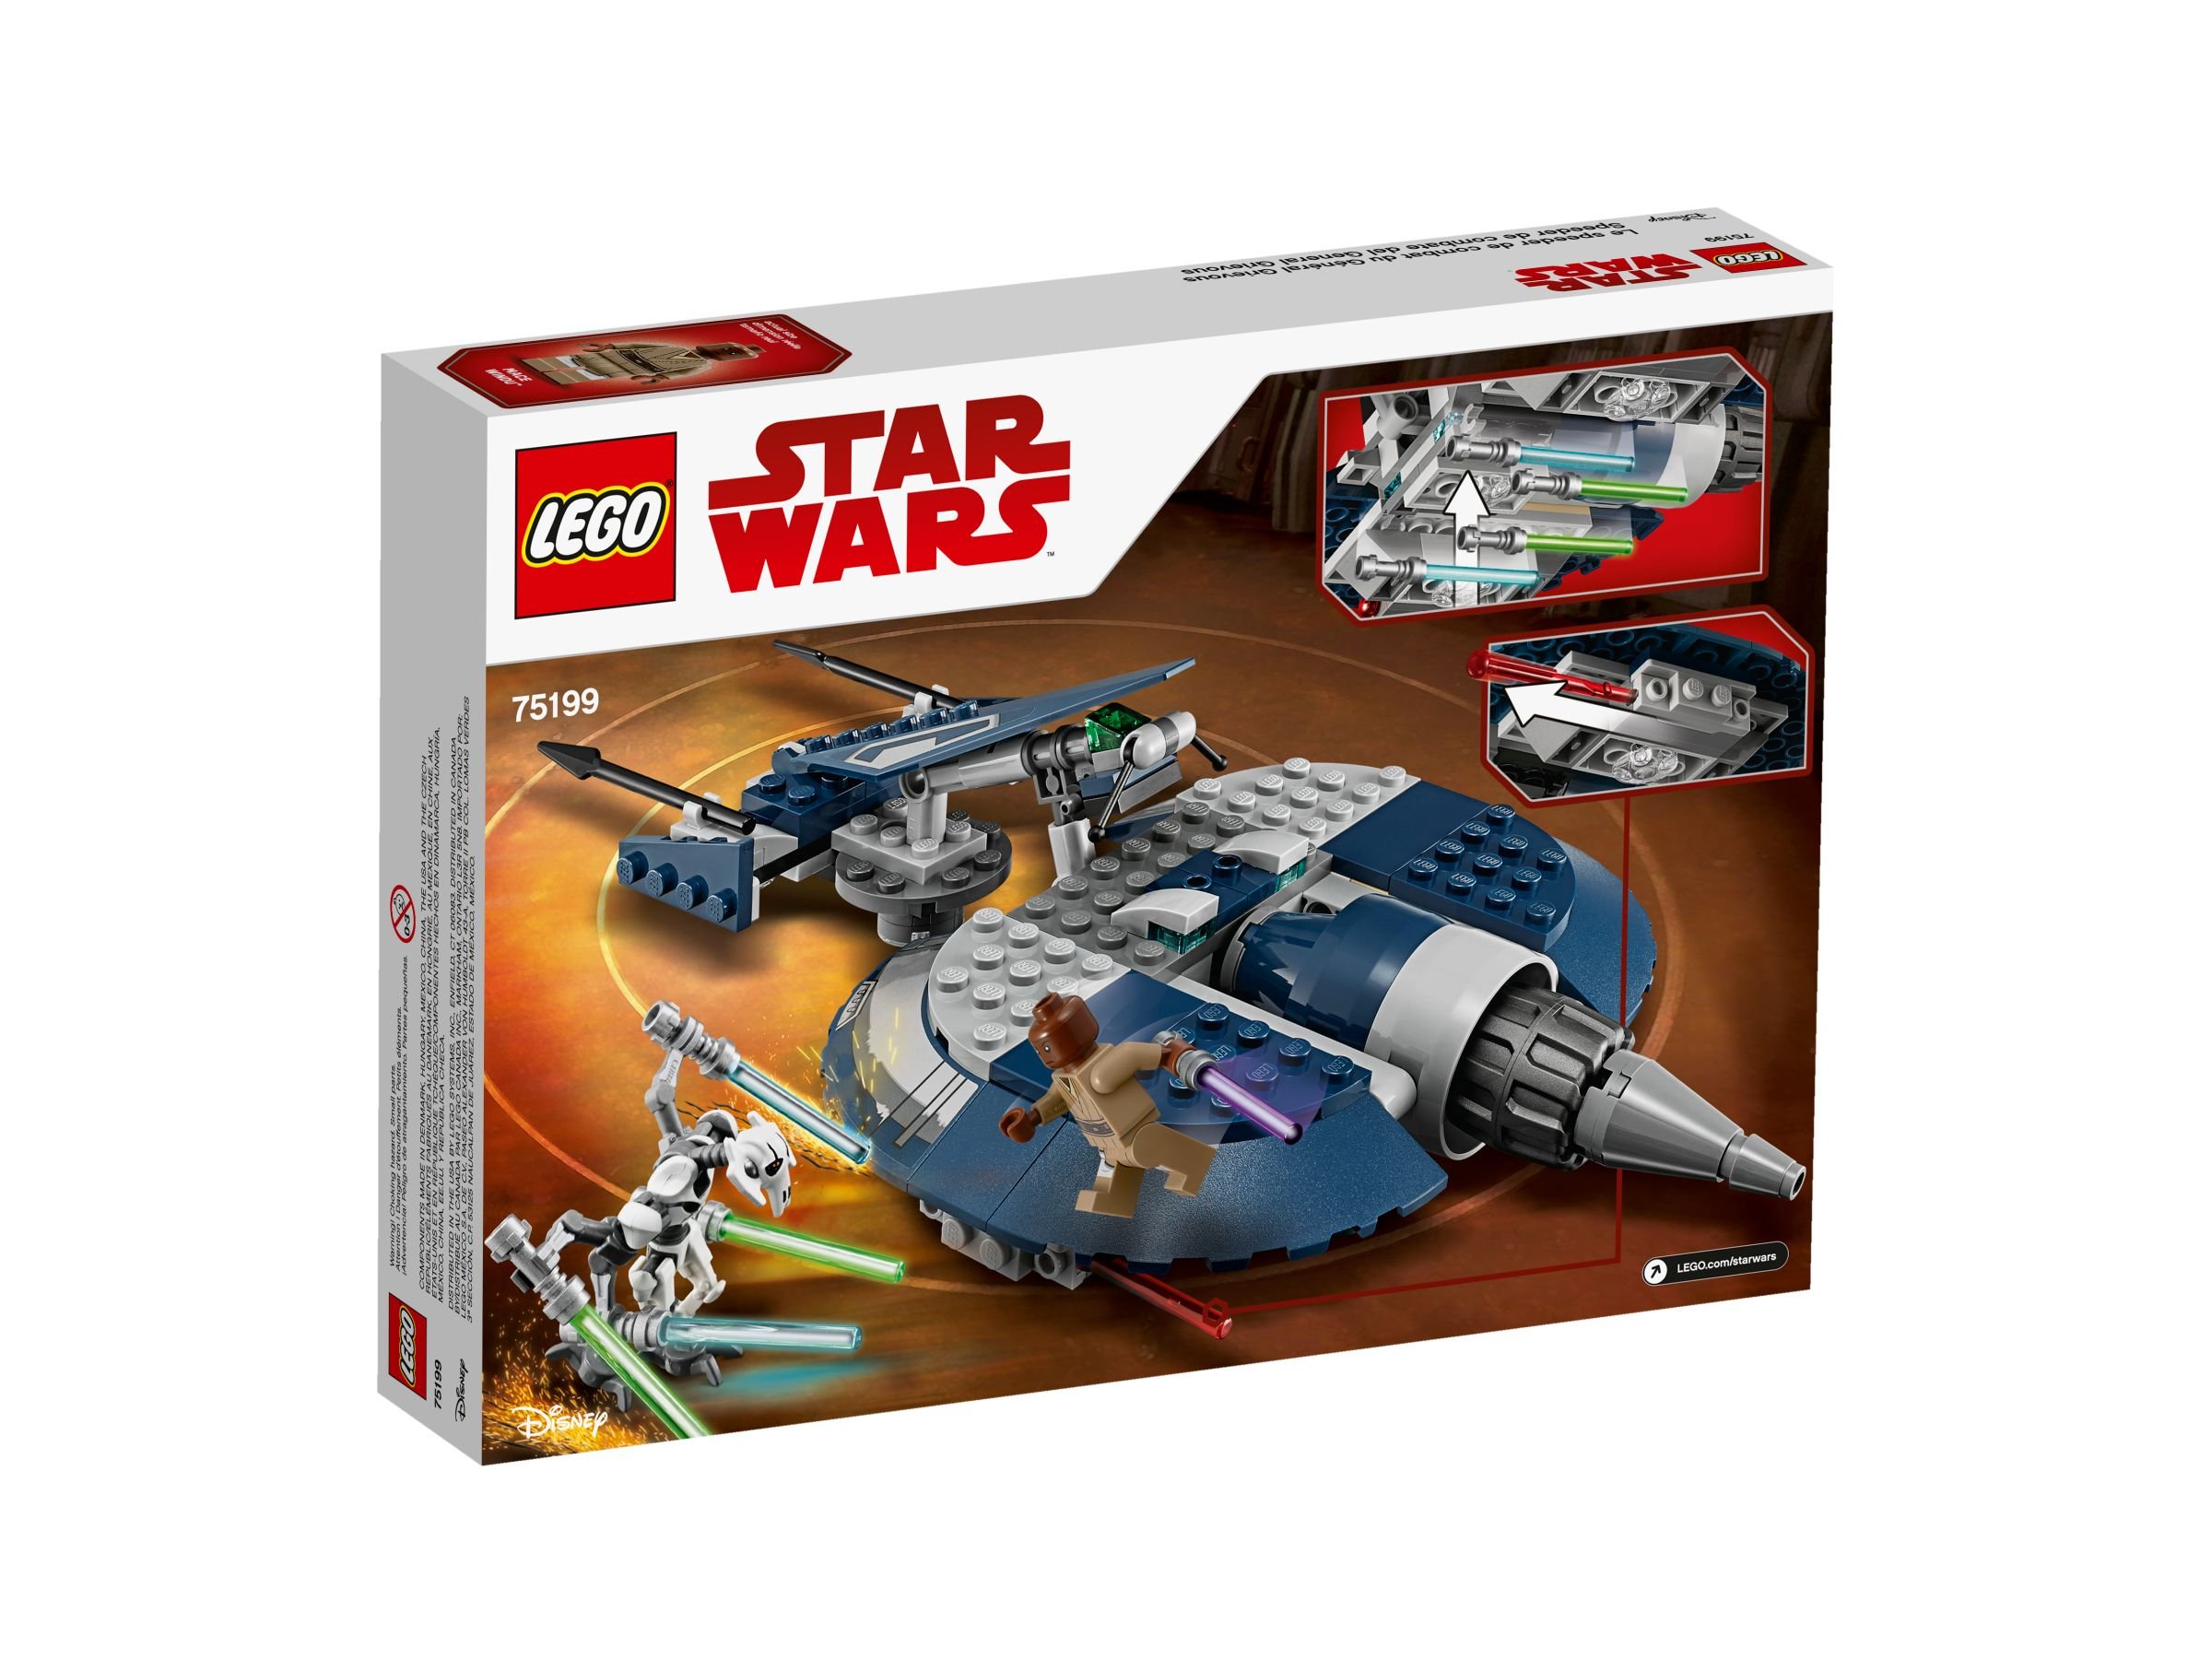 LEGO Star Wars 75199 General Grievous Combat Speeder LEGO_75199_alt2.jpg